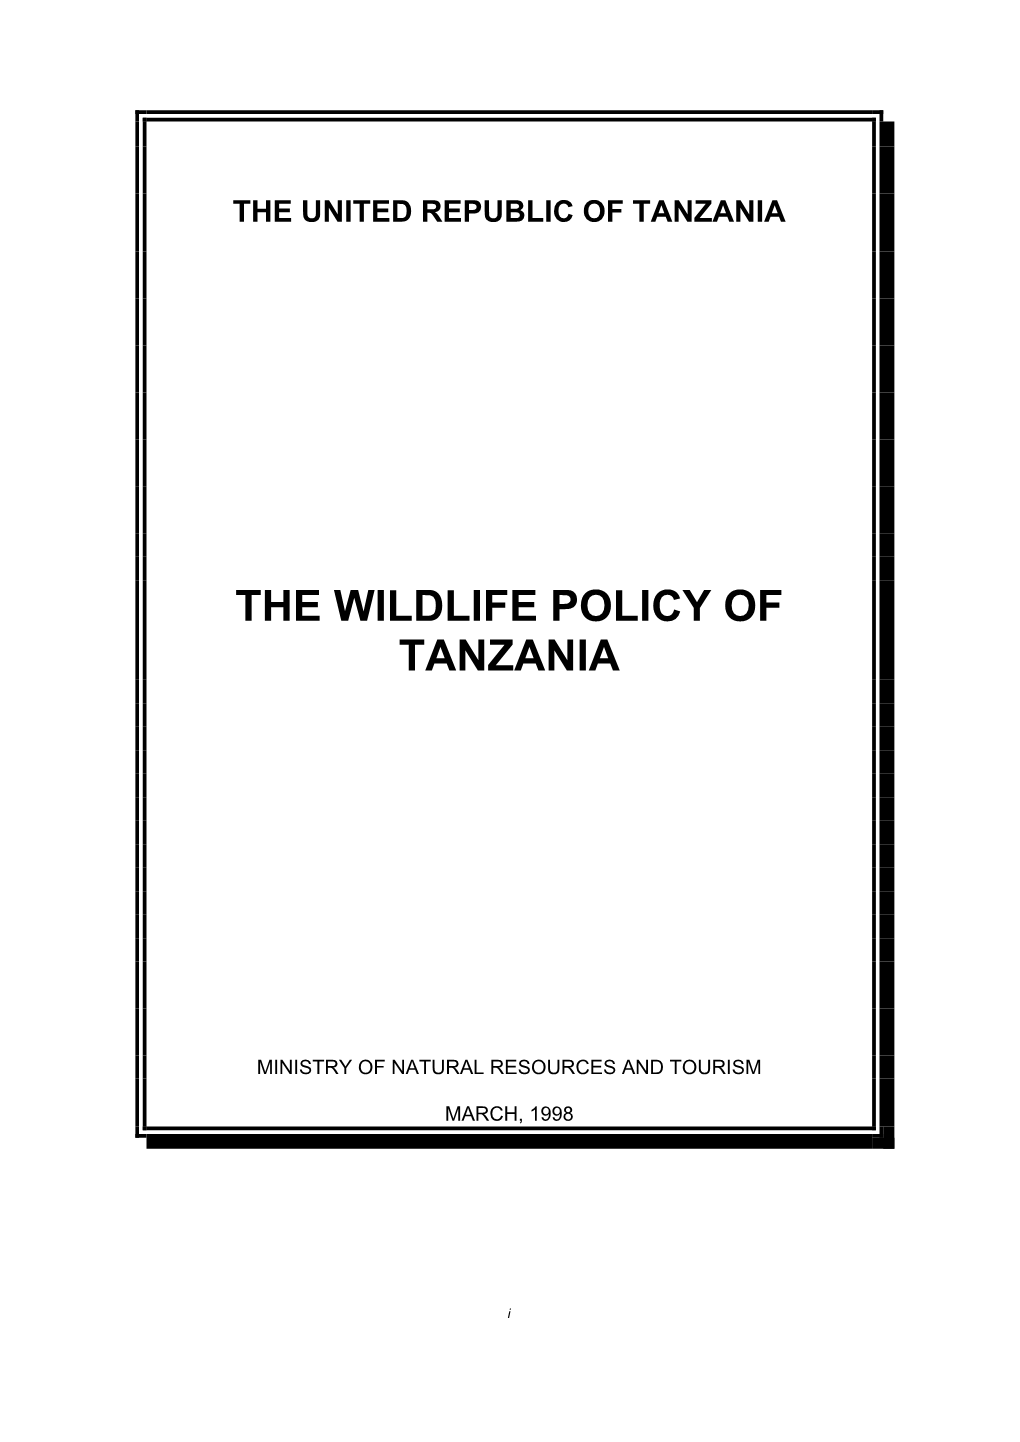 The Wildlife Policy of Tanzania